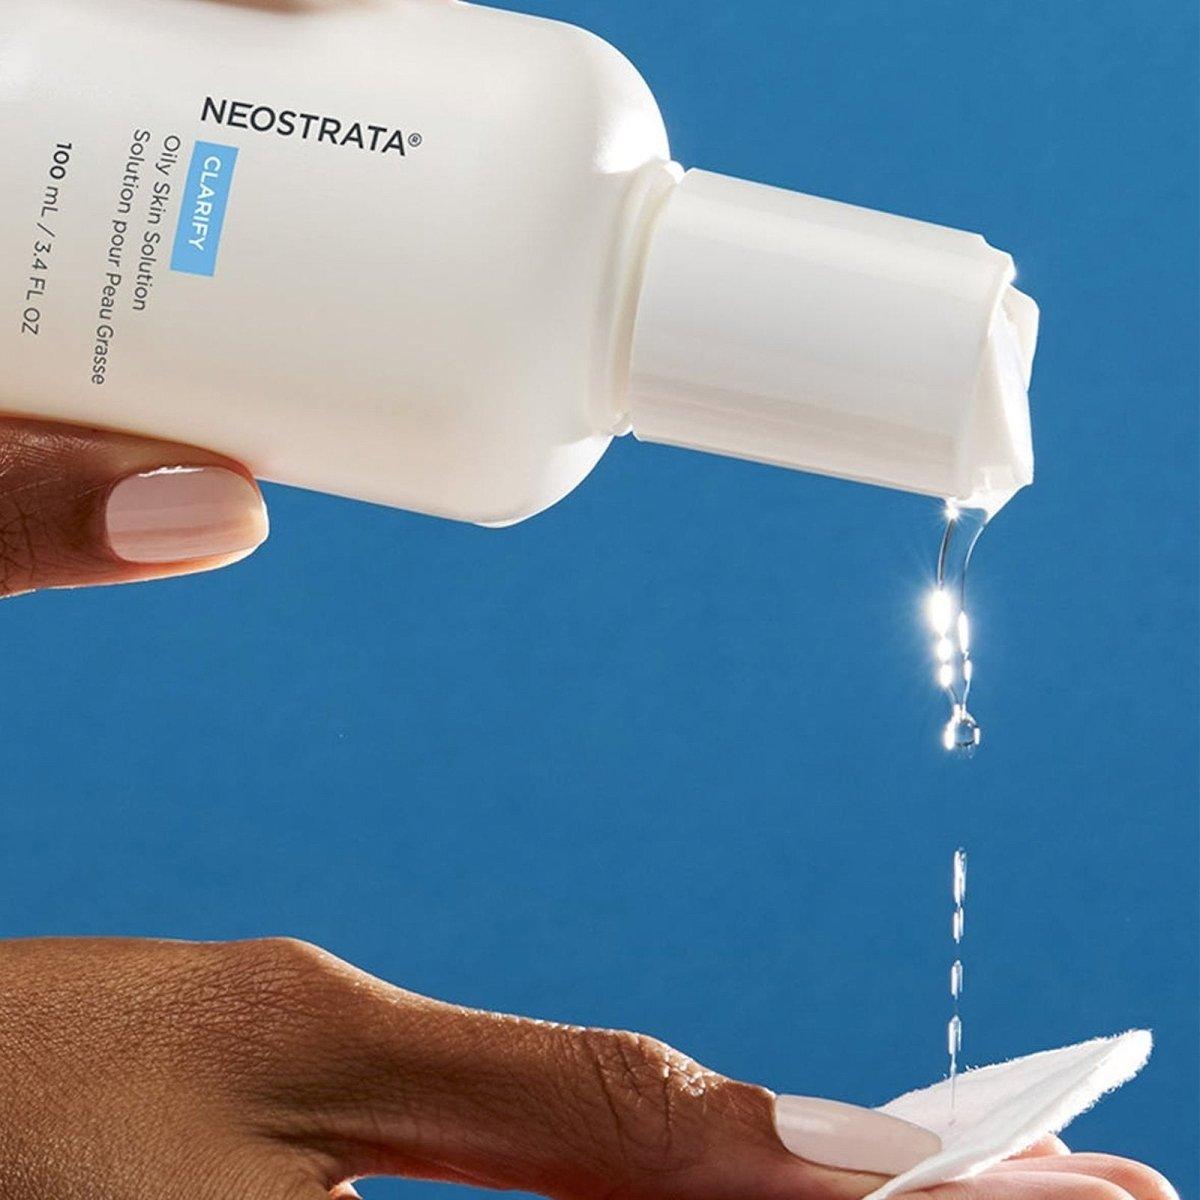 Neostrata | Clarify Oily Skin Solution - DG International Ventures Limited